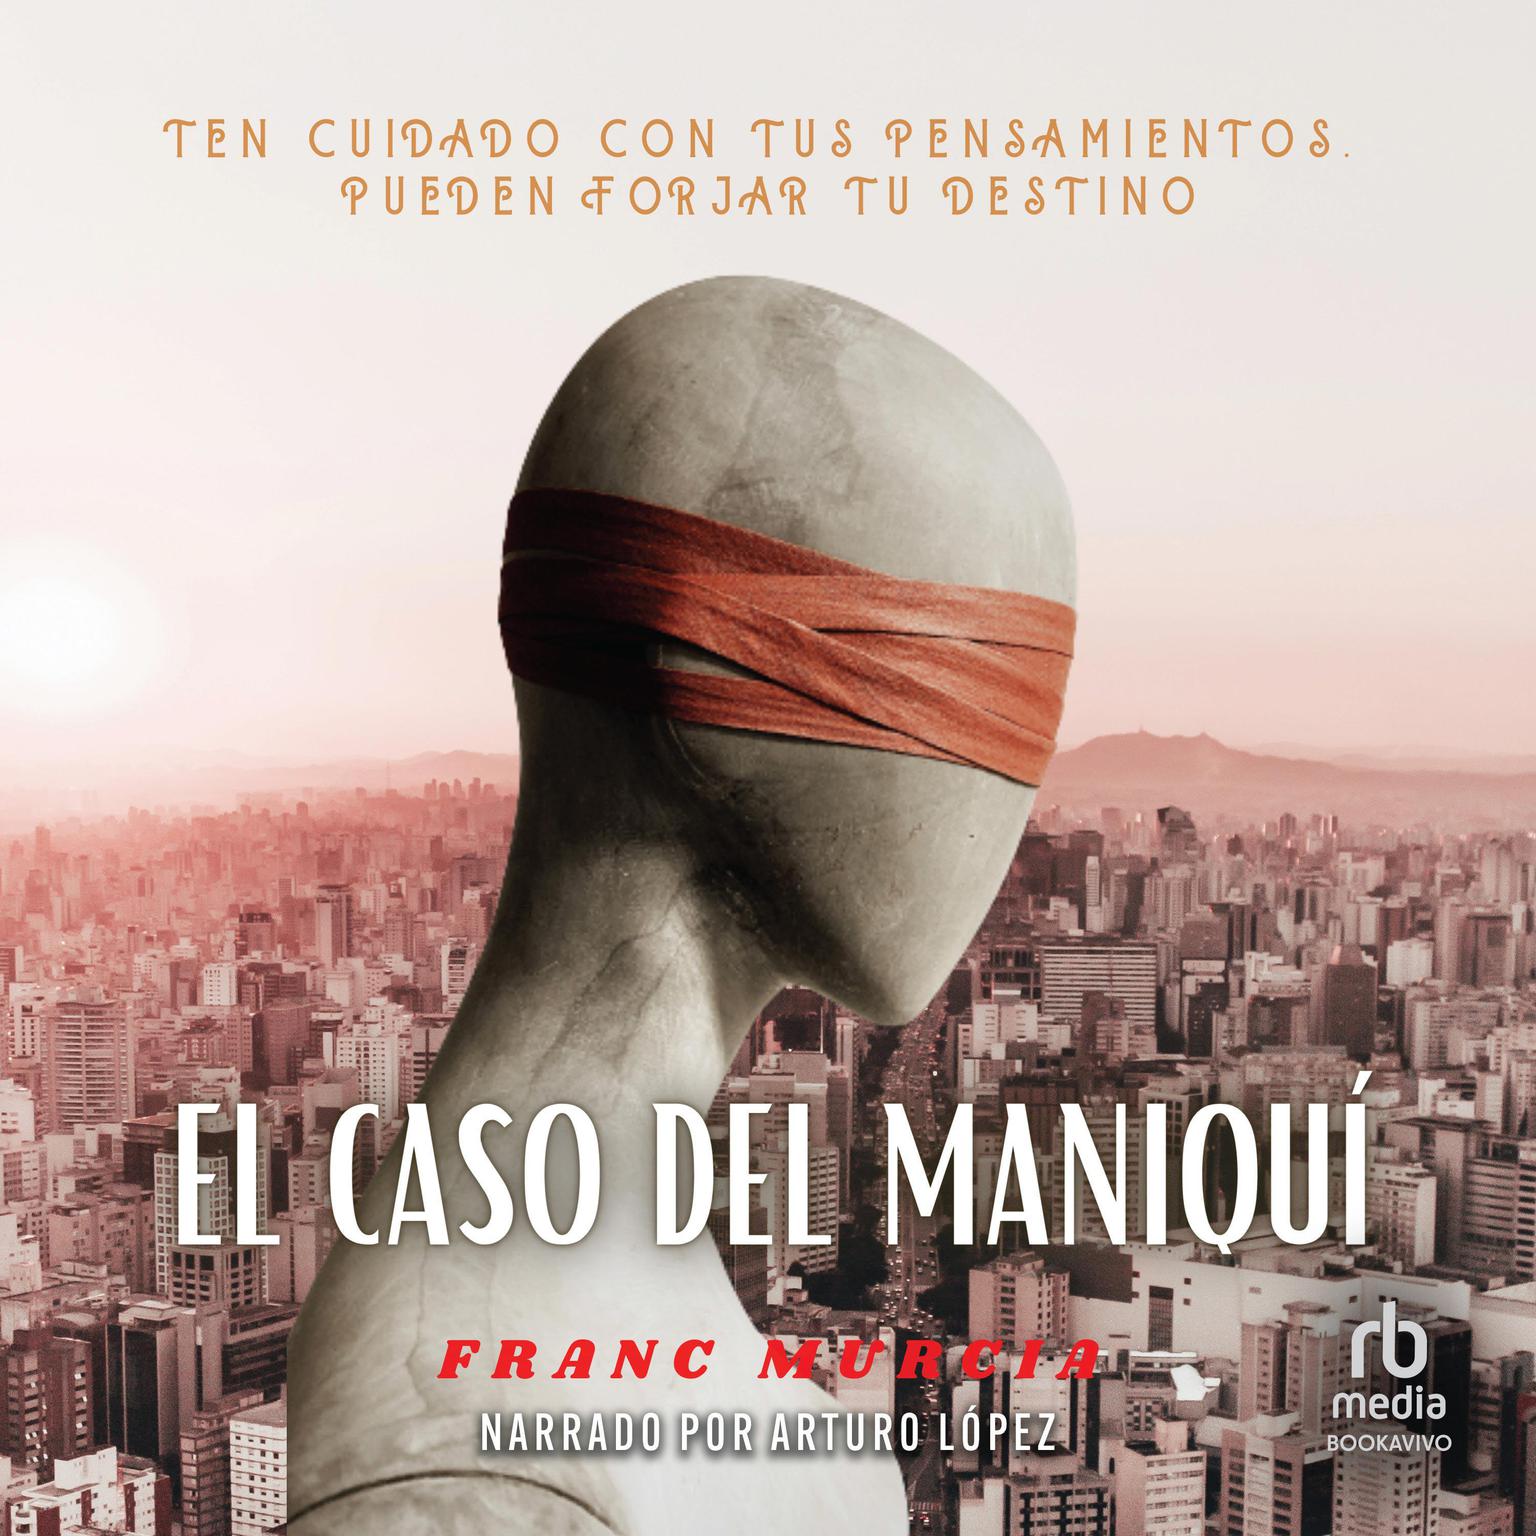 El caso del maniquí (The case of the Mannequin) Audiobook, by Franc Murcia